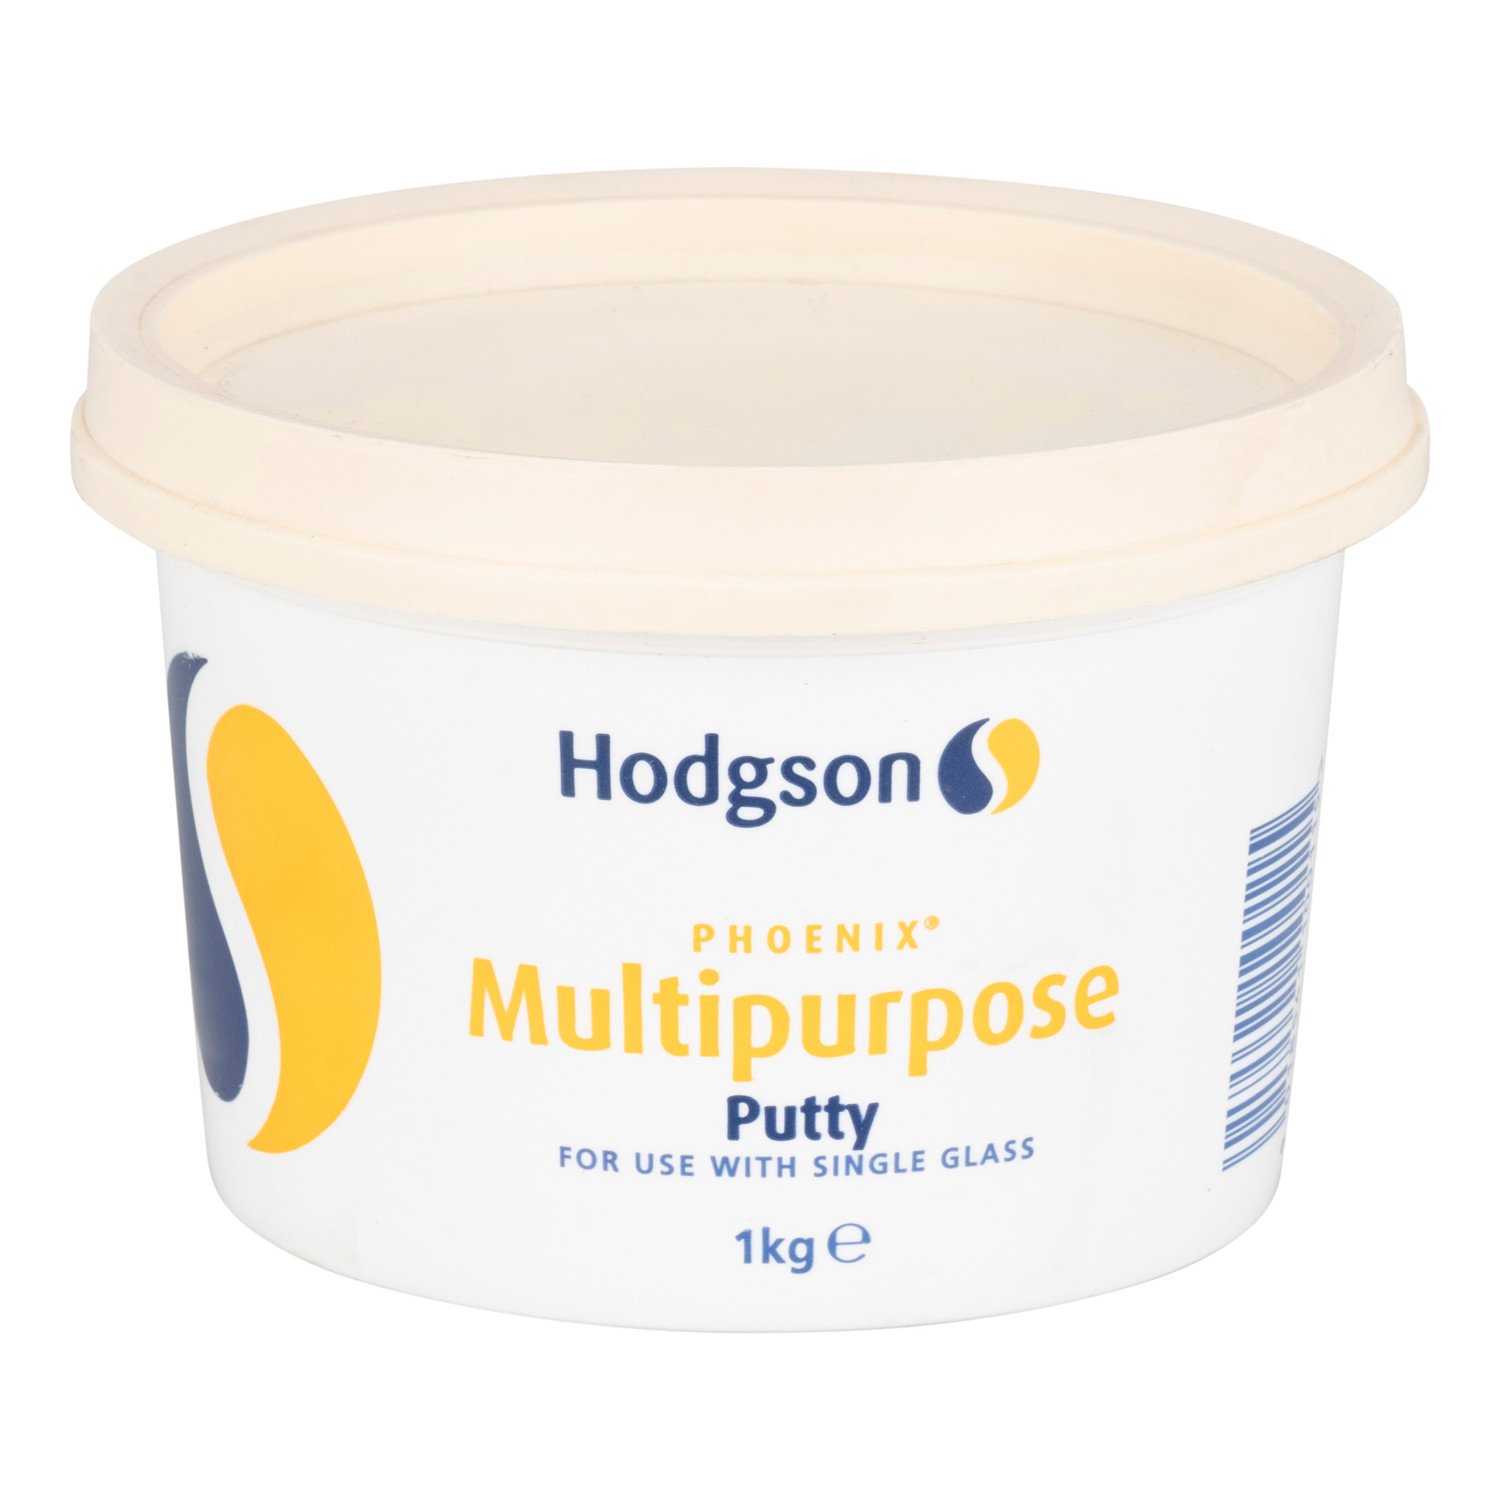 Hodgson Phoenix Multipurpose Putty 1kg Image